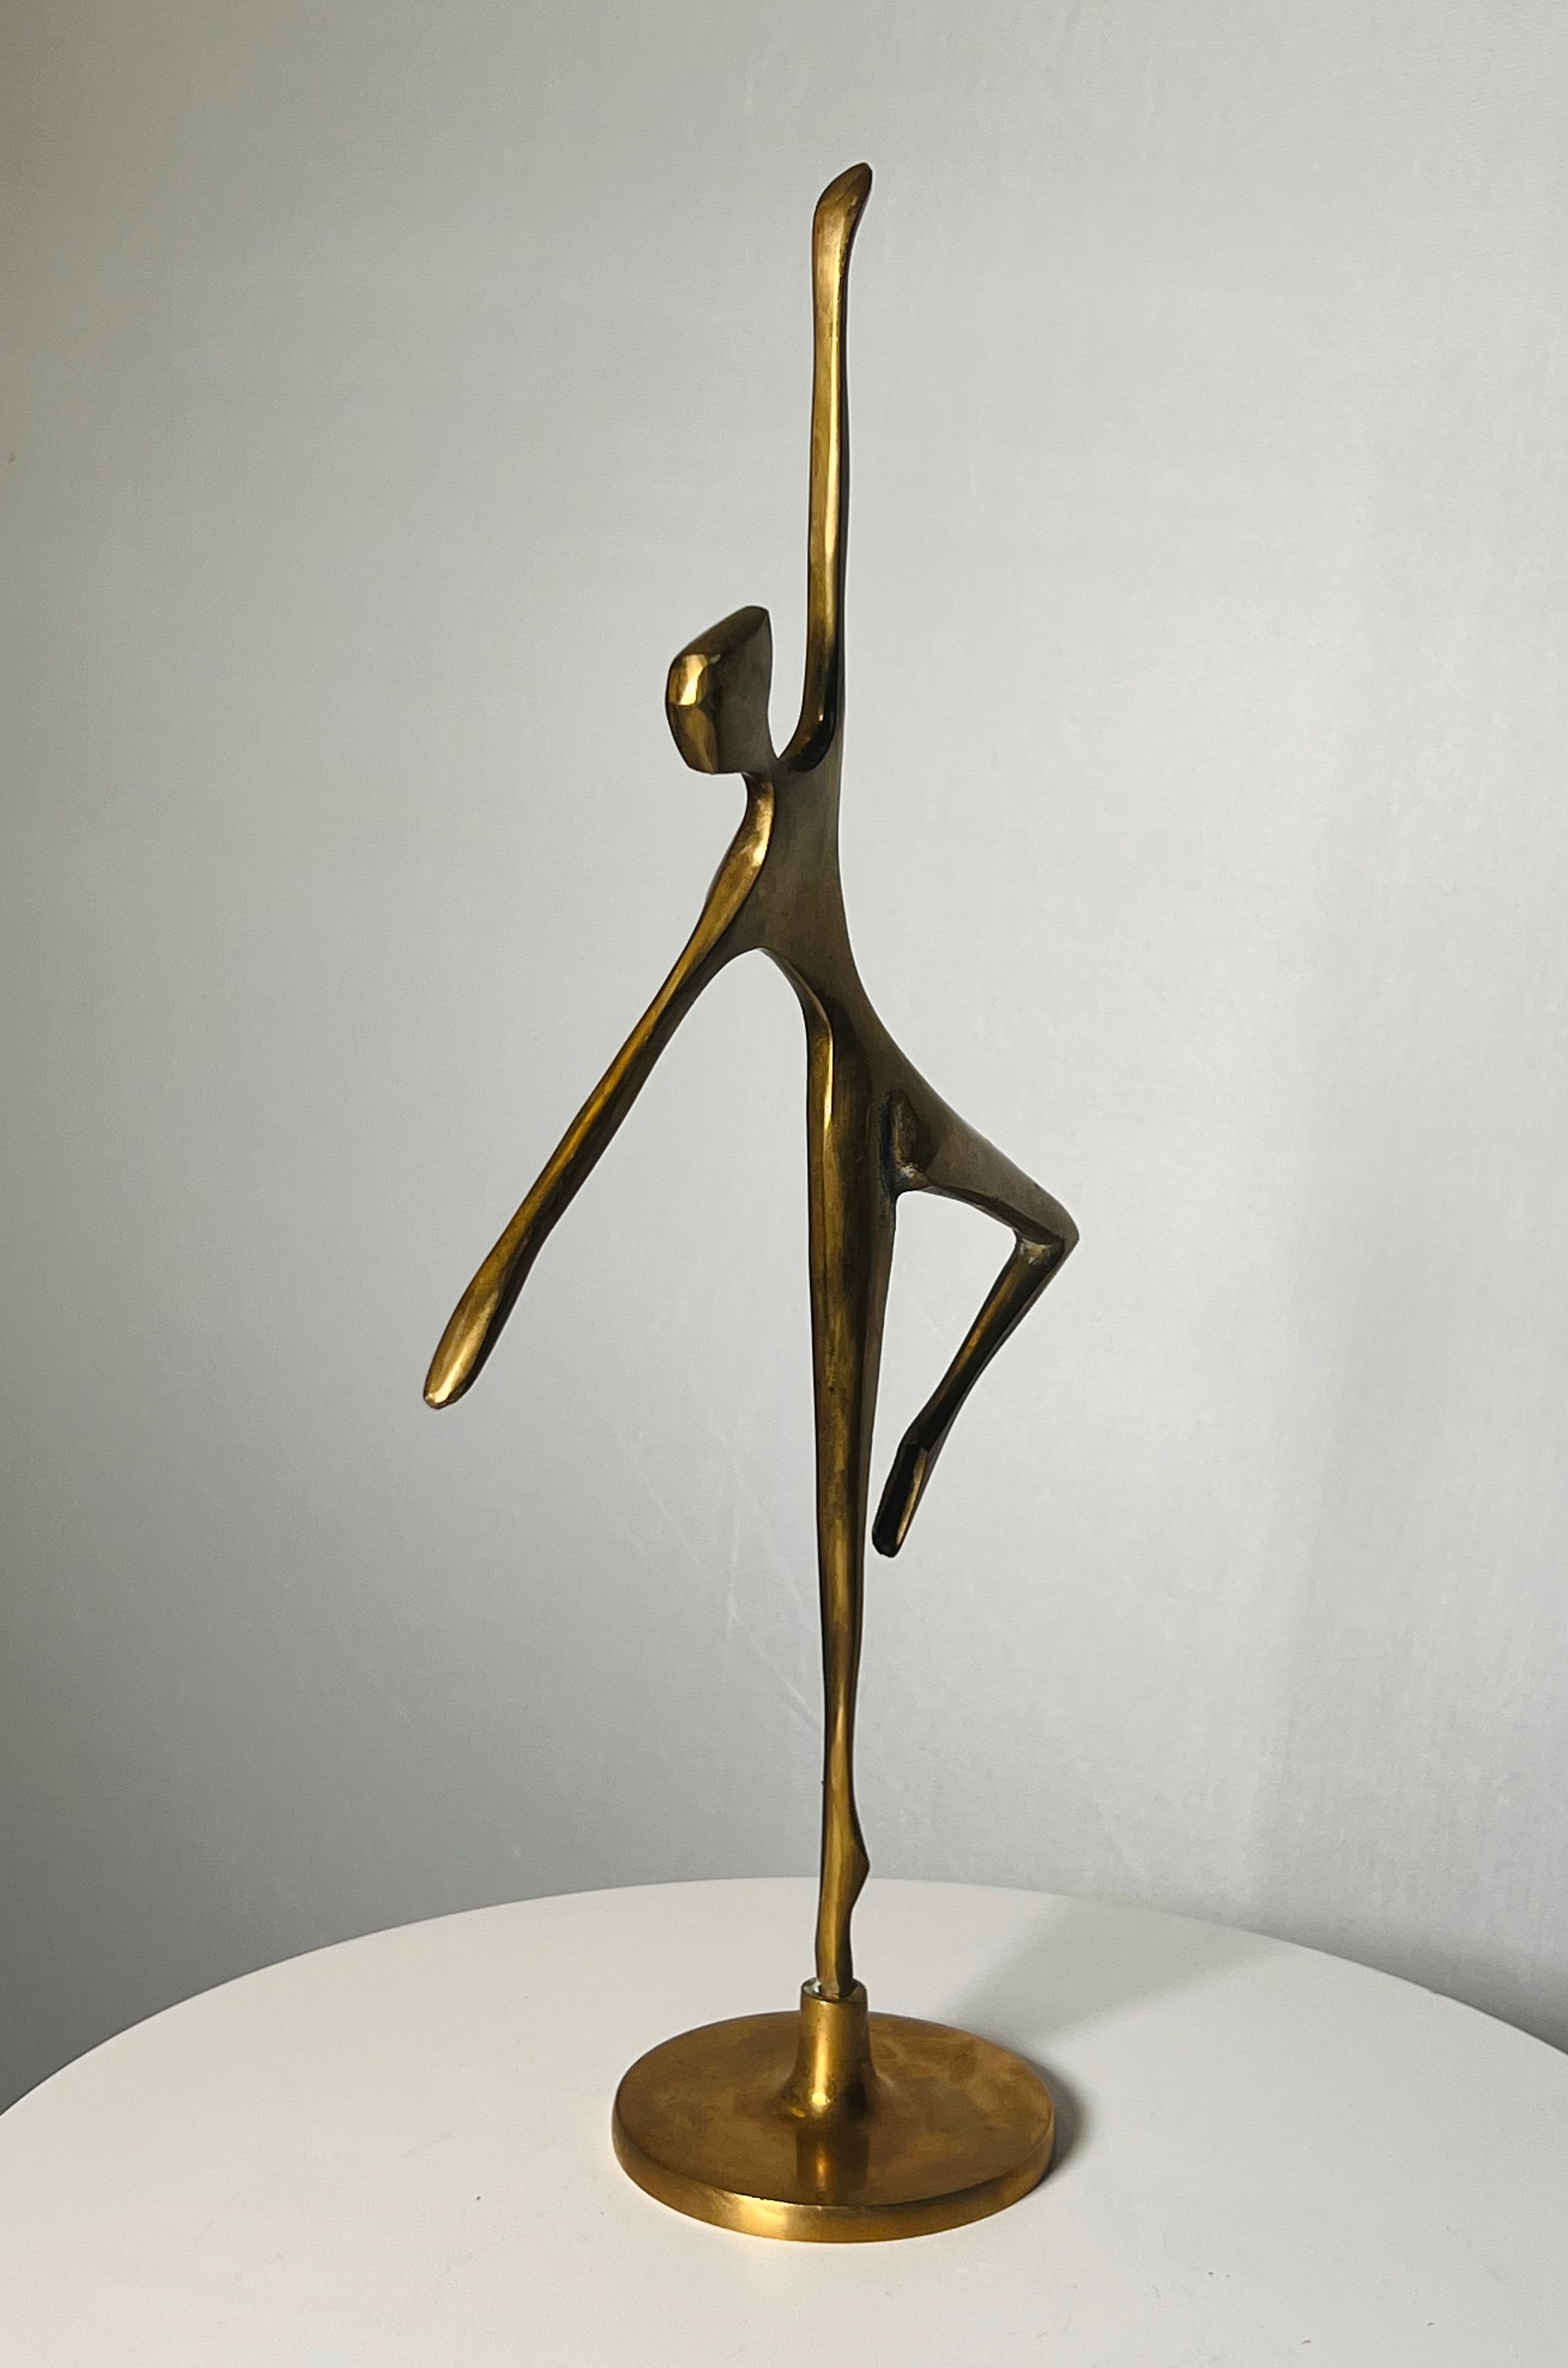 Vintage 1970s Brass Ballerina Sculptures (Set or Individuals) (Vintage)